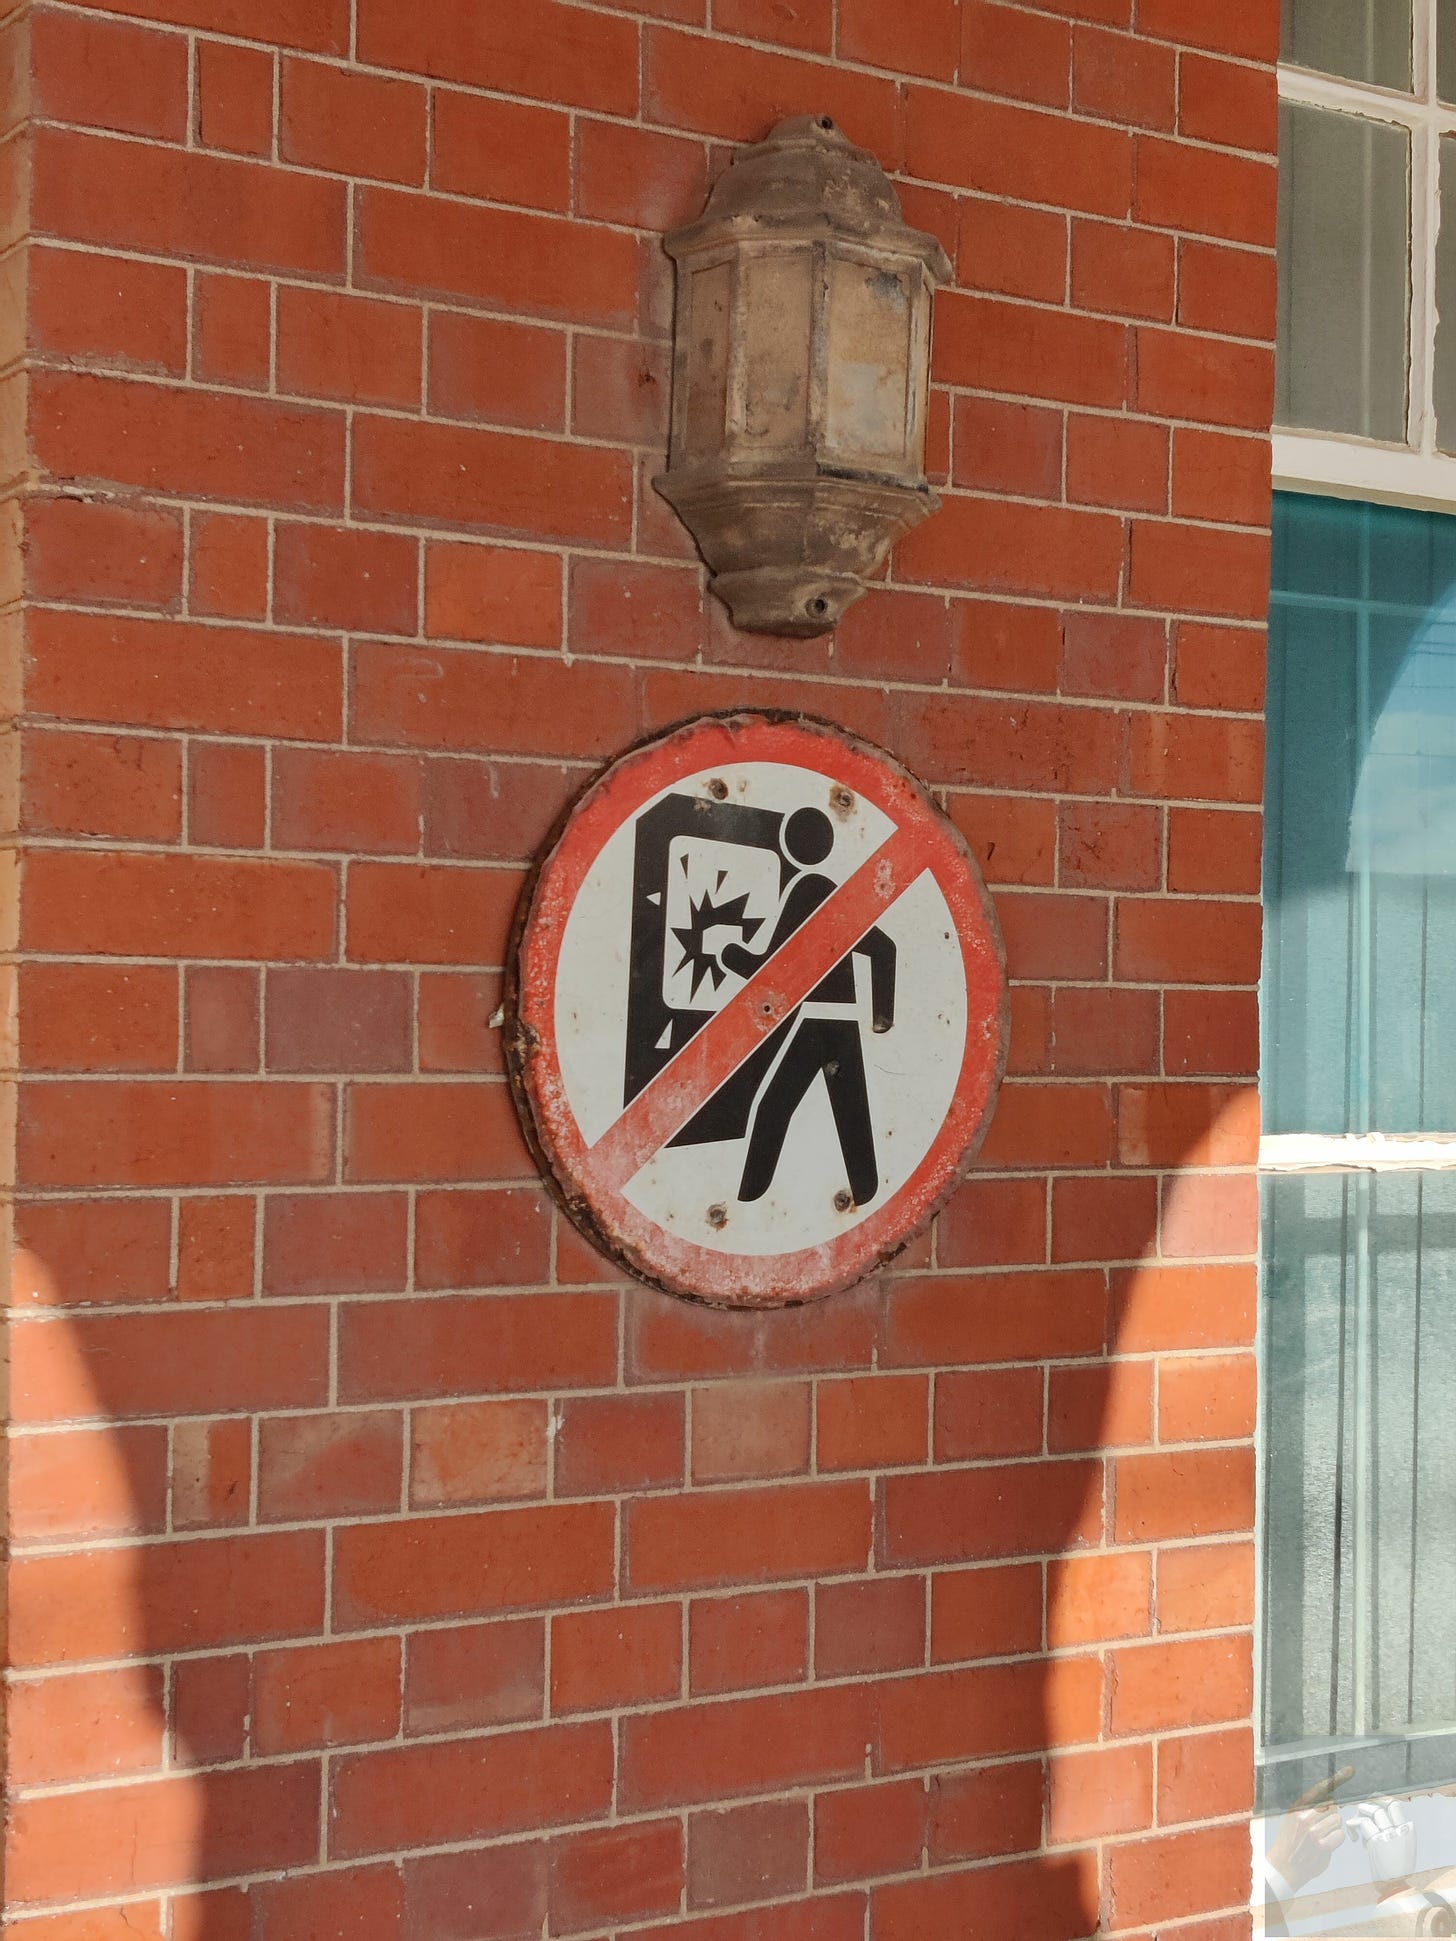 Sign: Do not smash windows